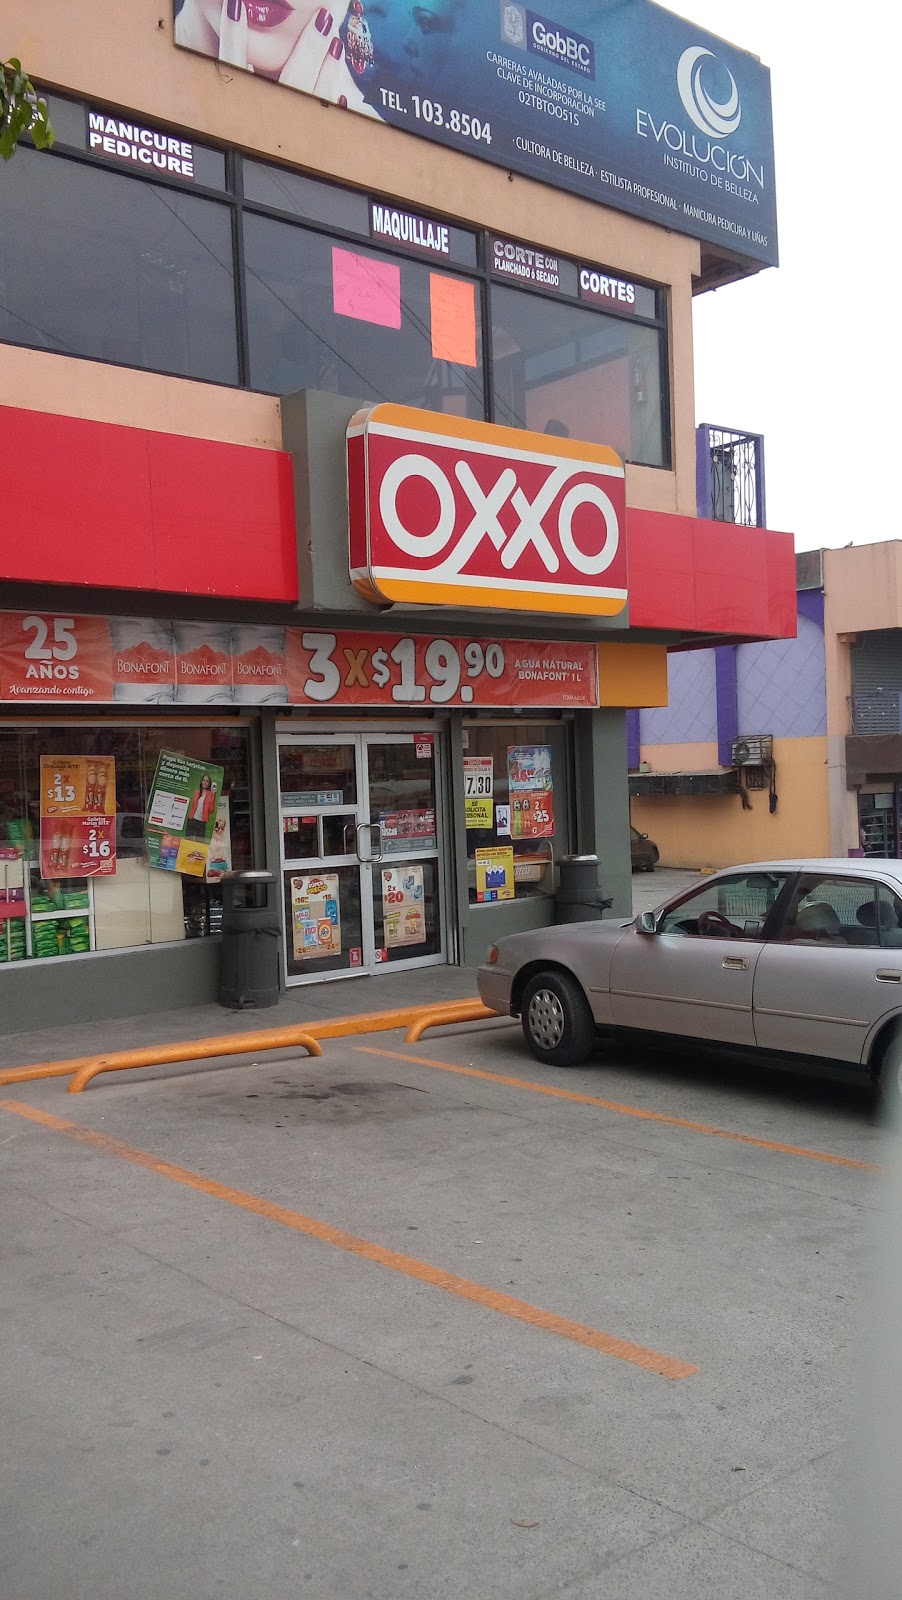 OXXO Zafiro | Corredor Tij-Rosarito 2000 24393, Villa del Sol, I, 22205 Tijuana, B.C., Mexico | Phone: 81 8320 2020